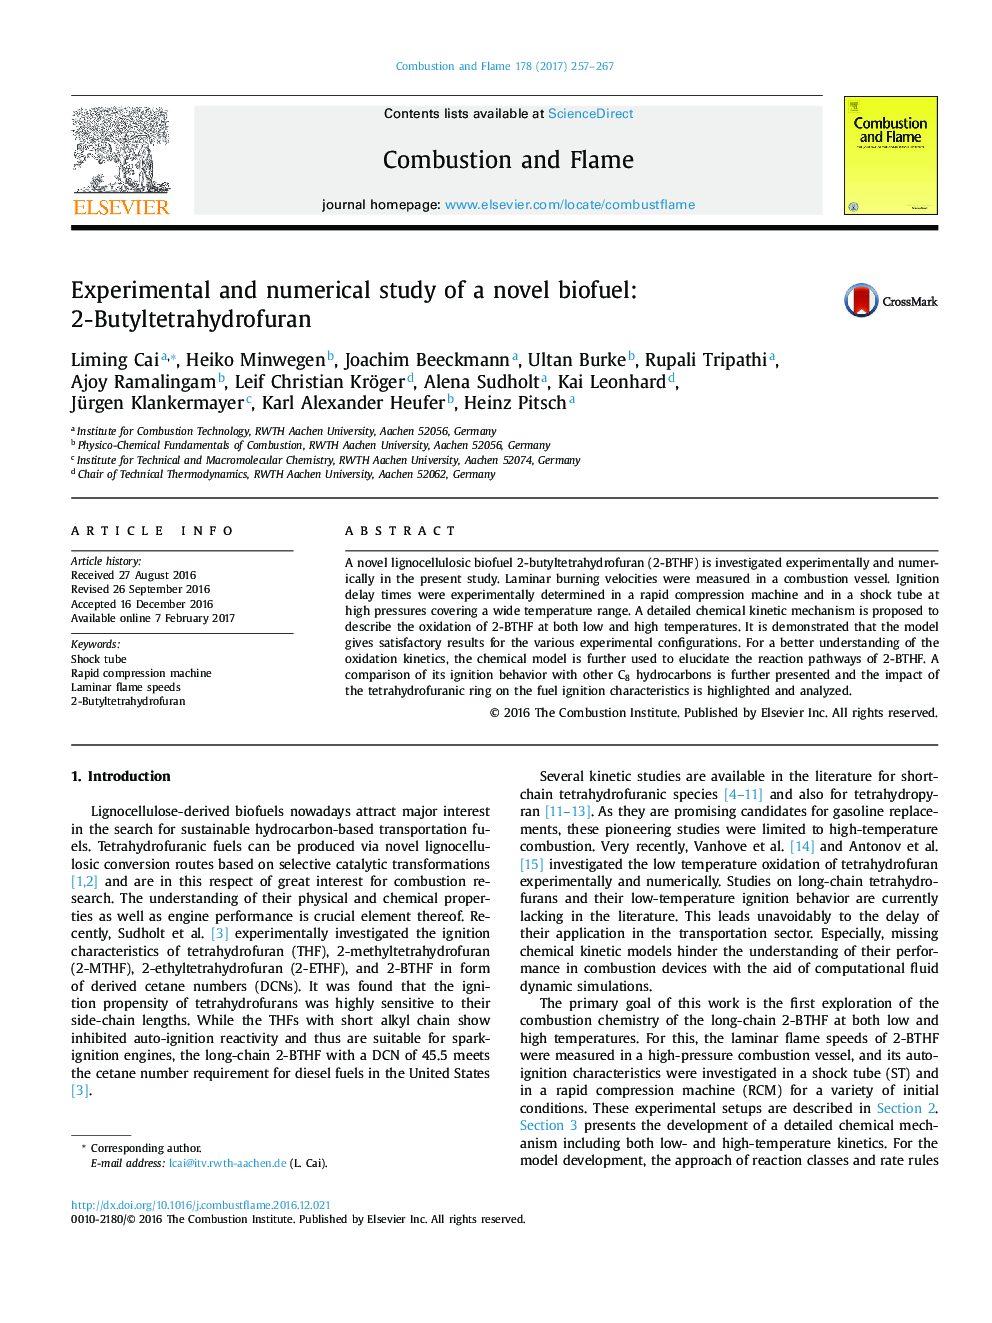 Experimental and numerical study of a novel biofuel: 2-Butyltetrahydrofuran